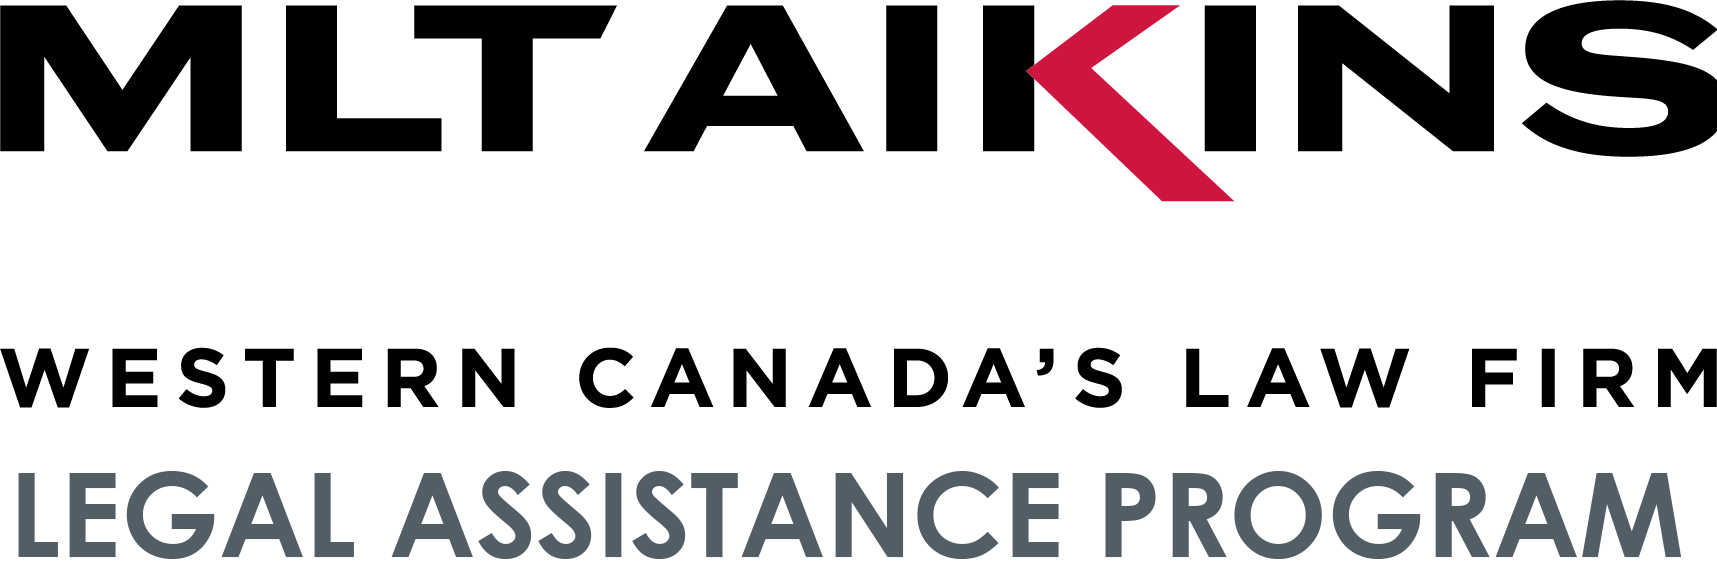 MLT Aikins Western Canada's Law Firm Legal Assistance Program